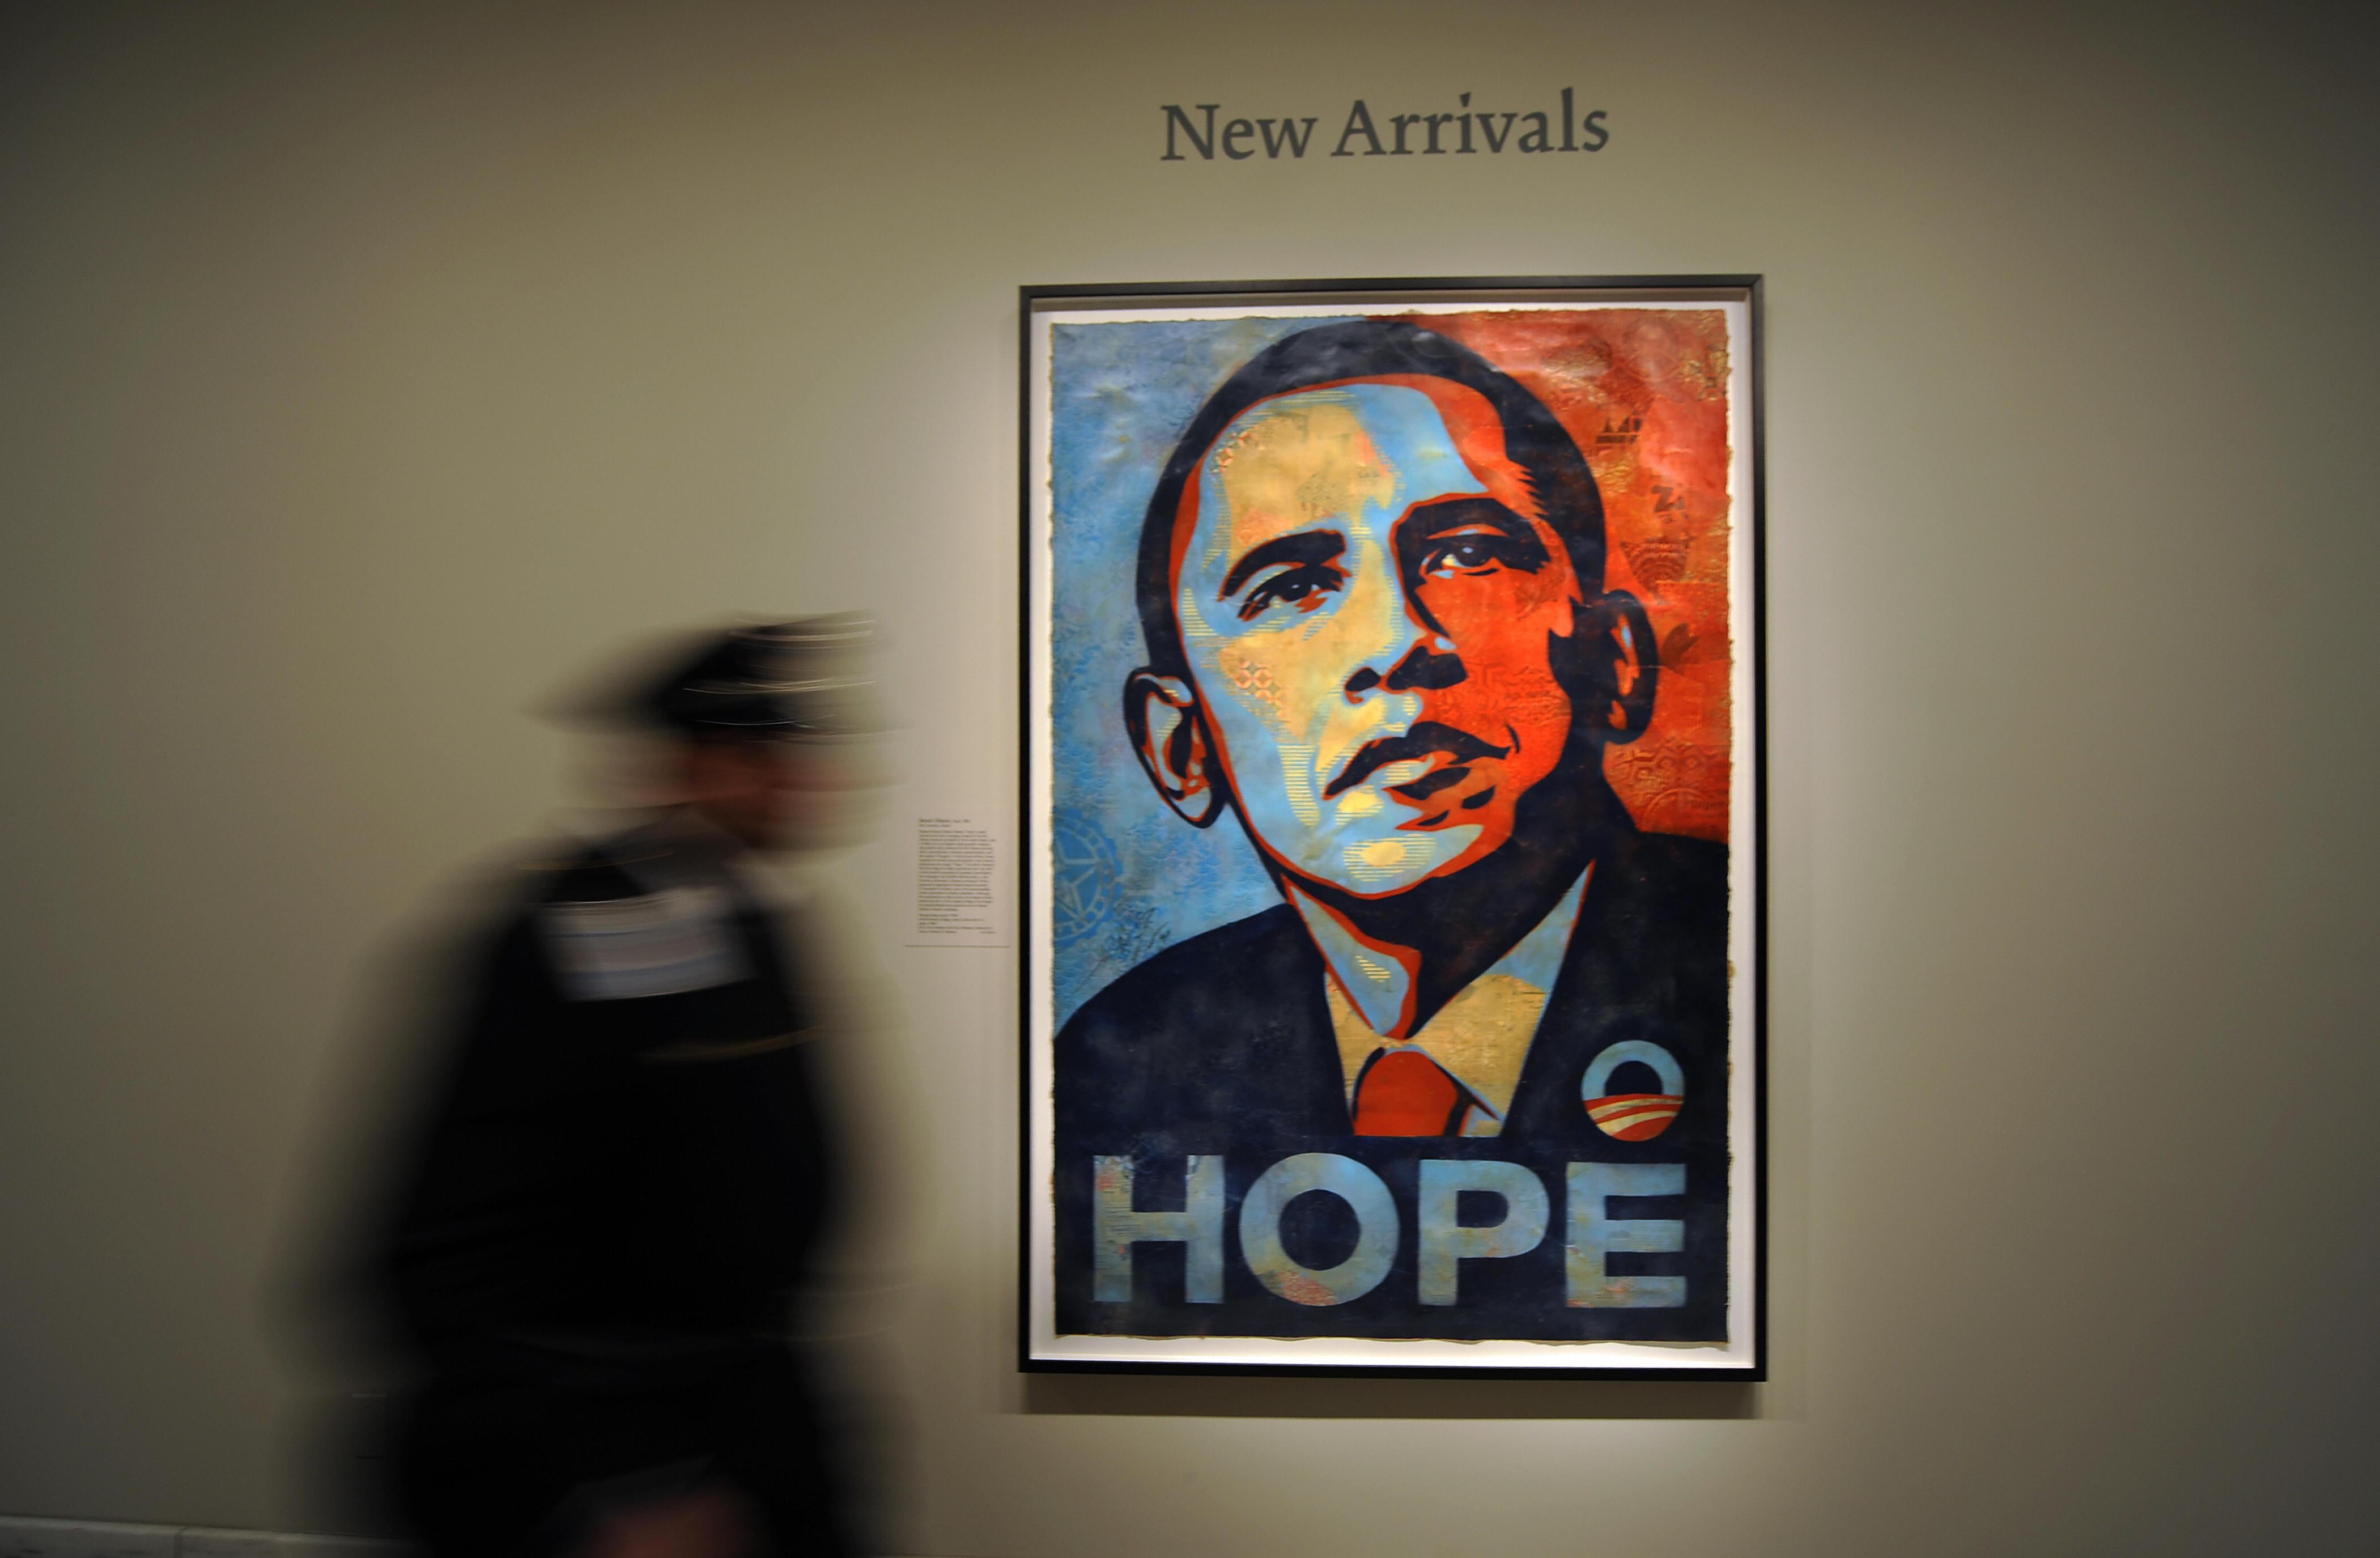 Gotham typeface: Frere-Jones font from Obama “hope” poster defines era.